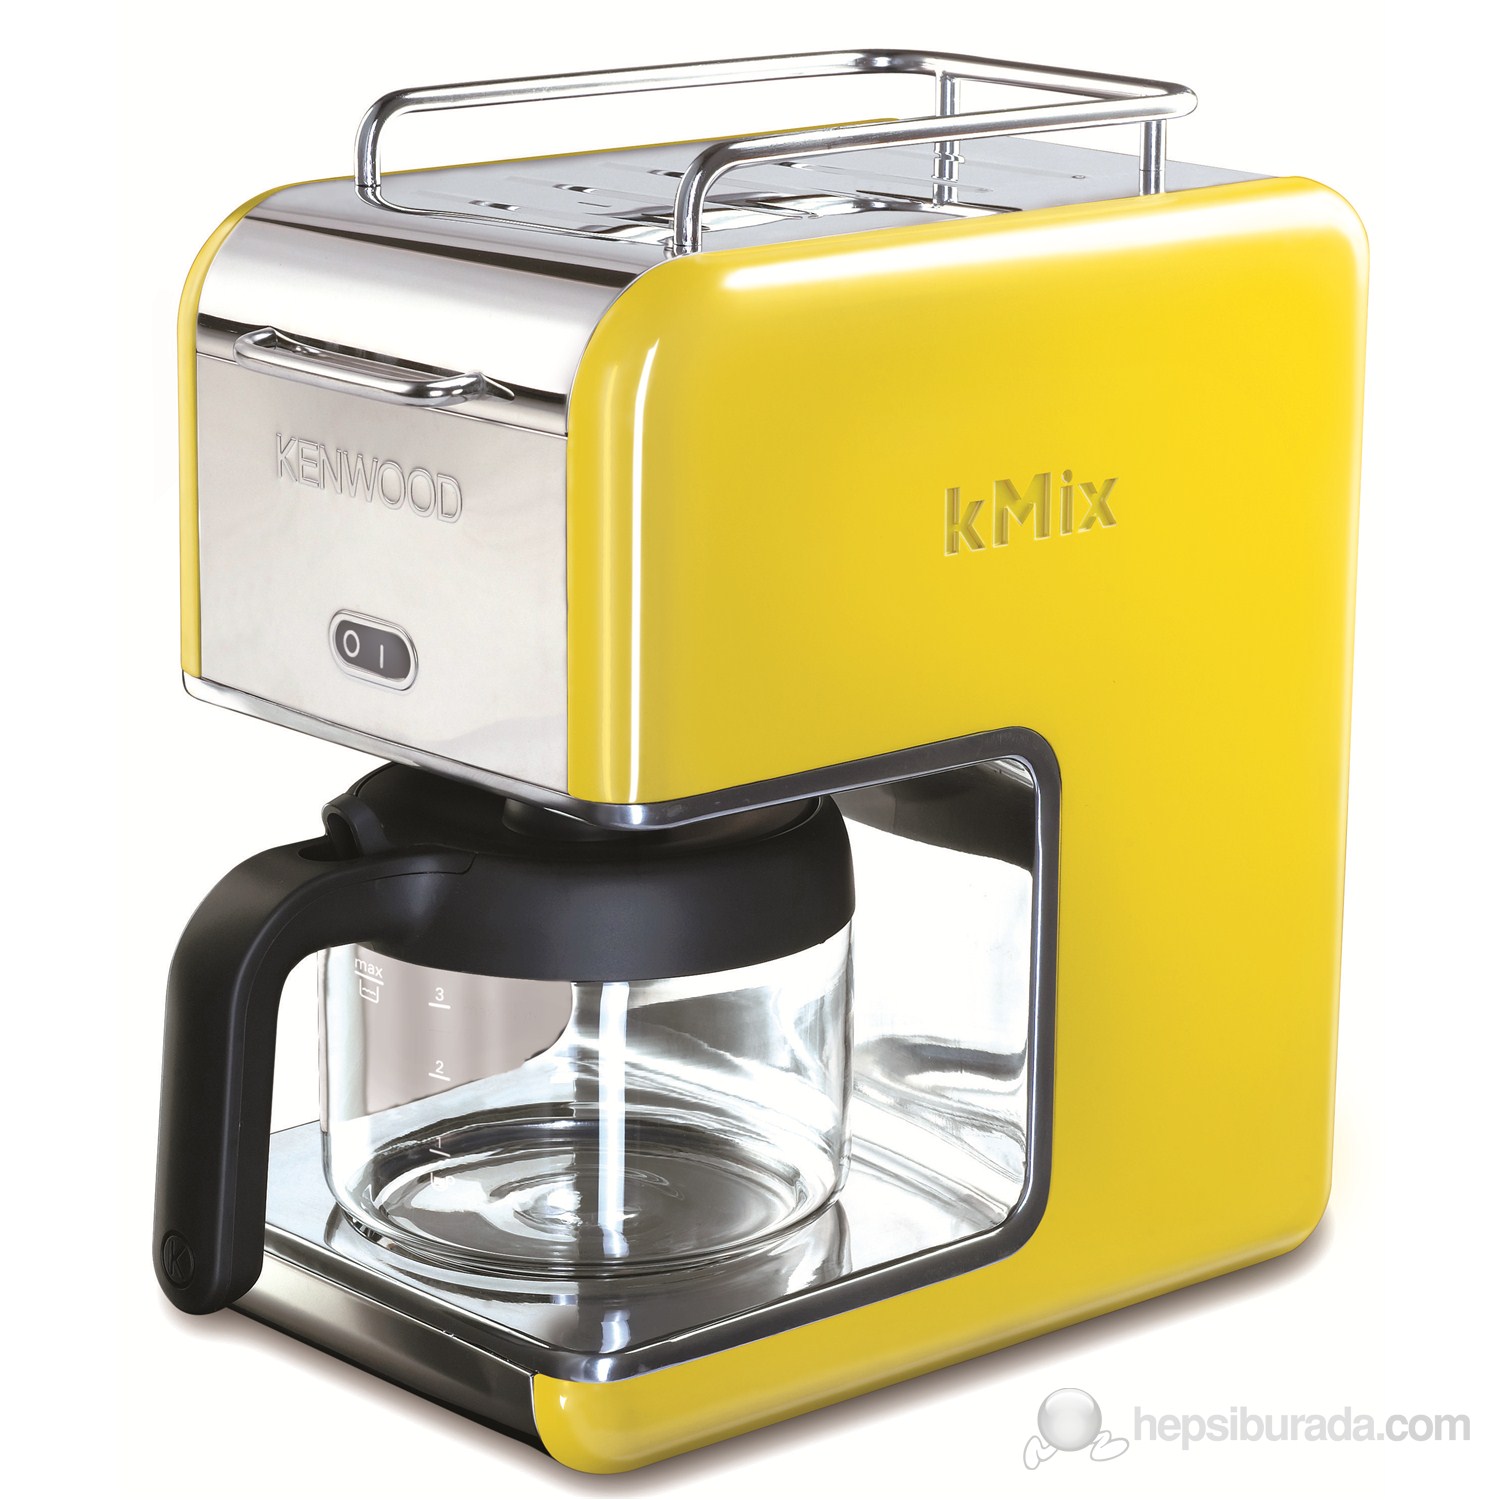 Kenwood CM028 kMix Serisi Filtre Kahve Makinesi Sarı